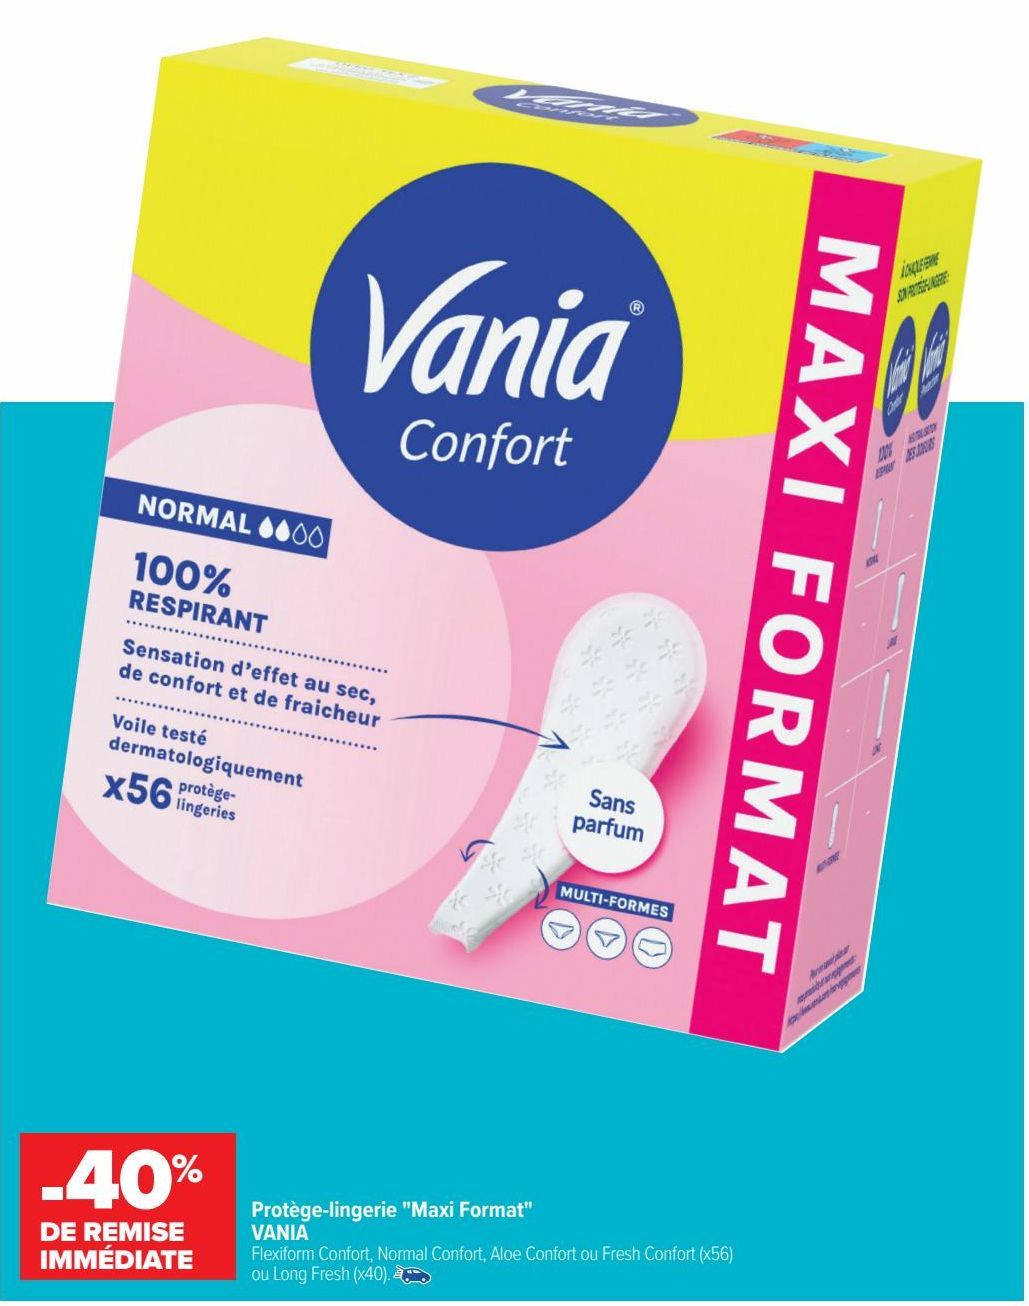 protège-lingerie "Maxi Format" VANIA 